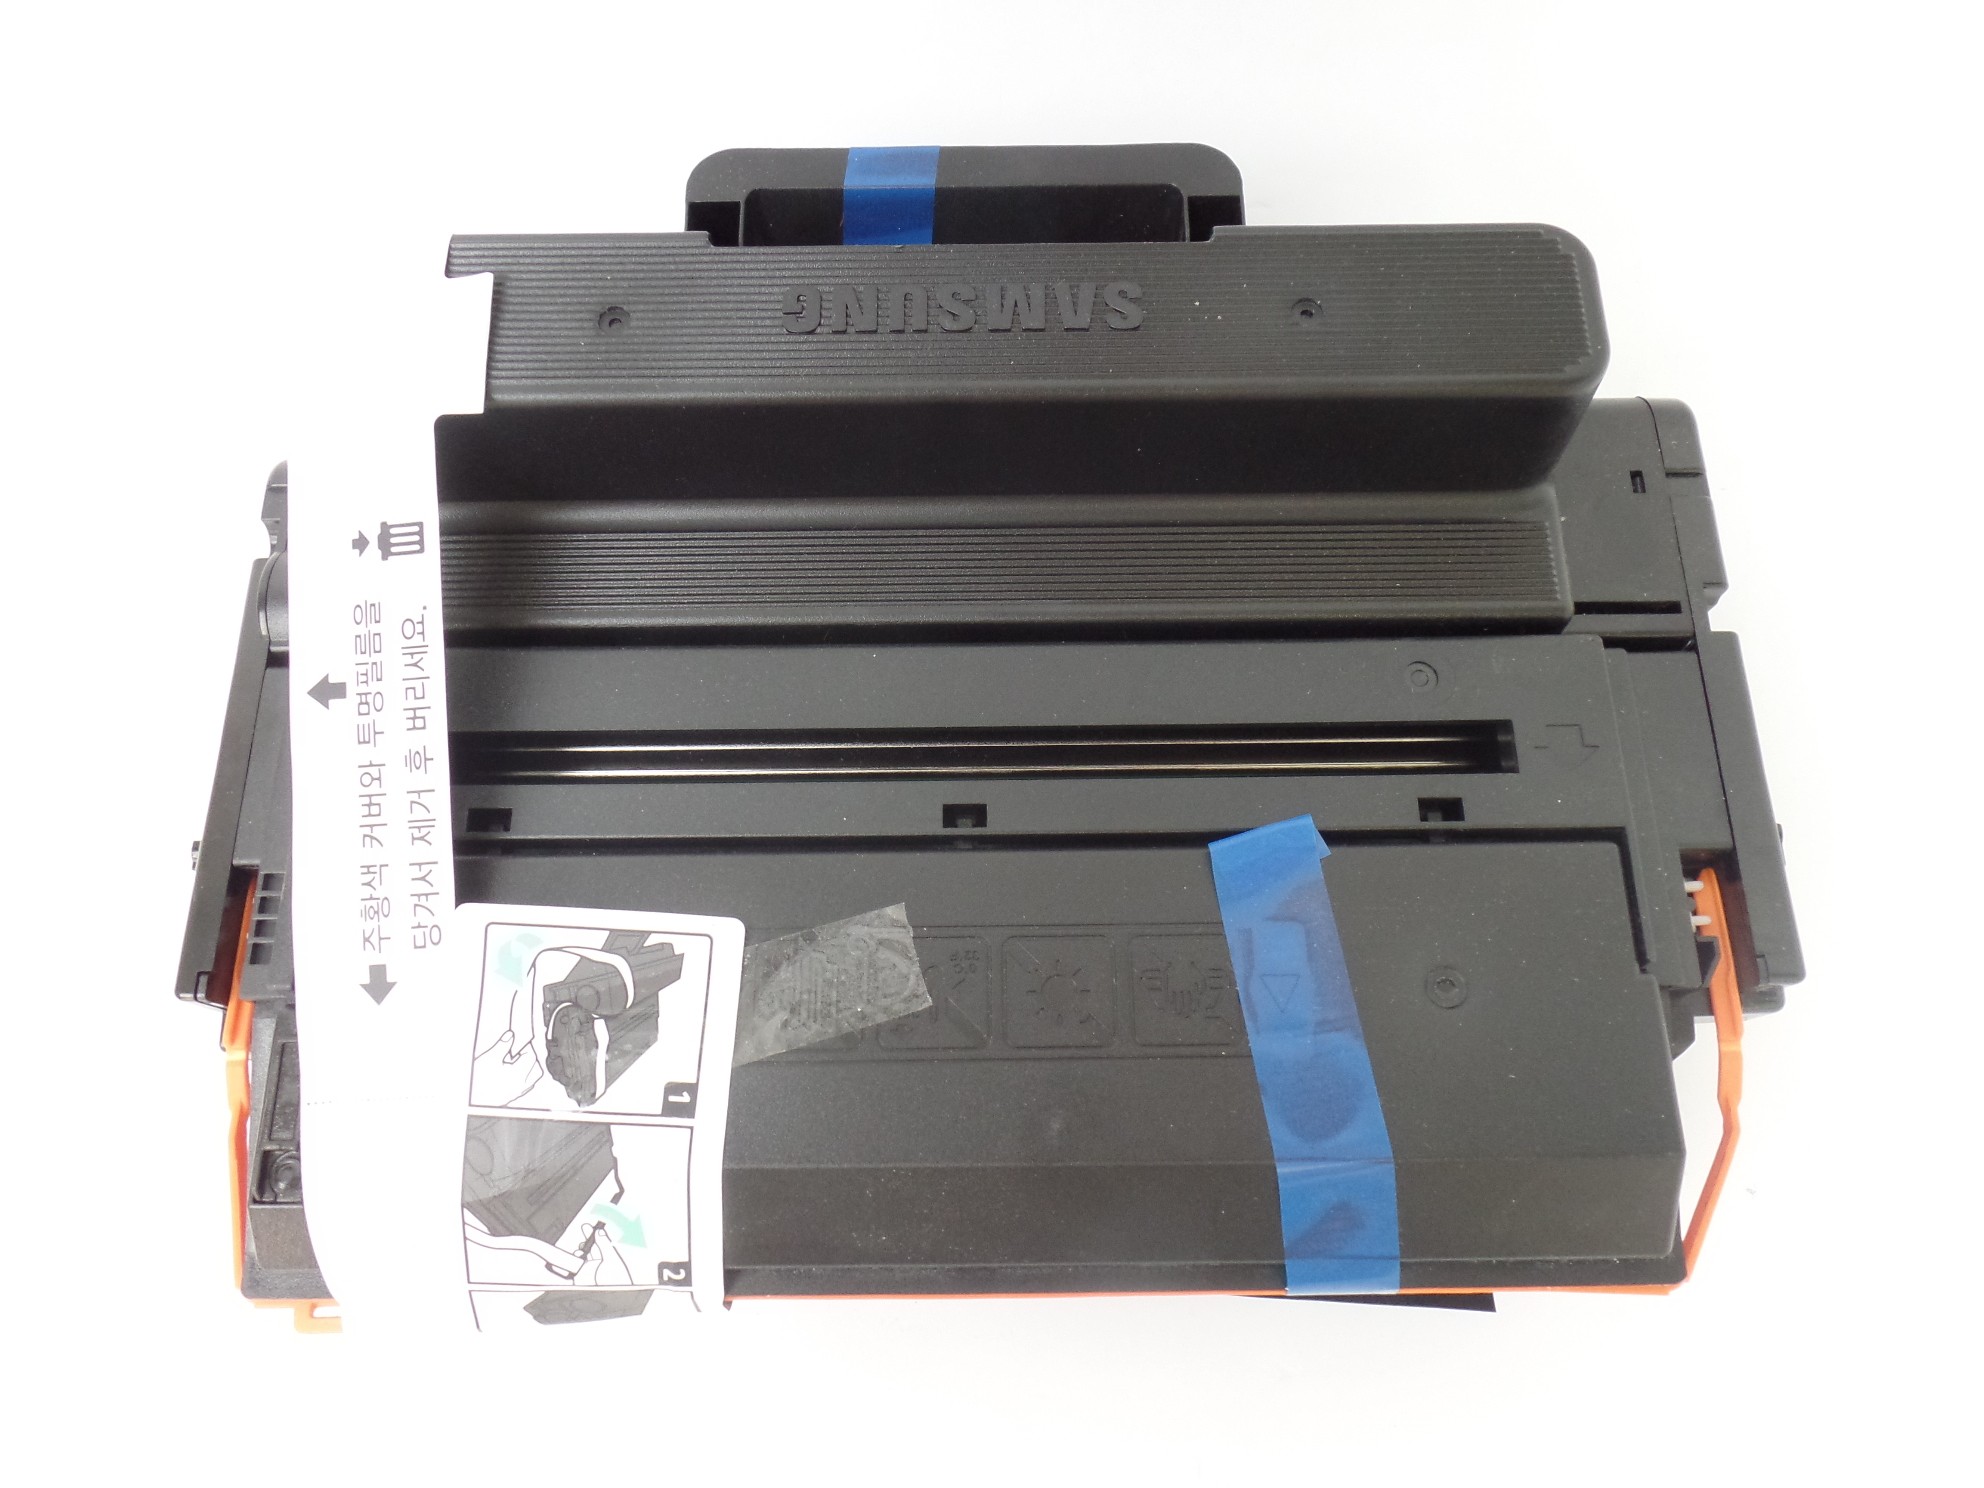 OEM Original Starter Toner Cartridge For Samsung M3820DW Laser Printer